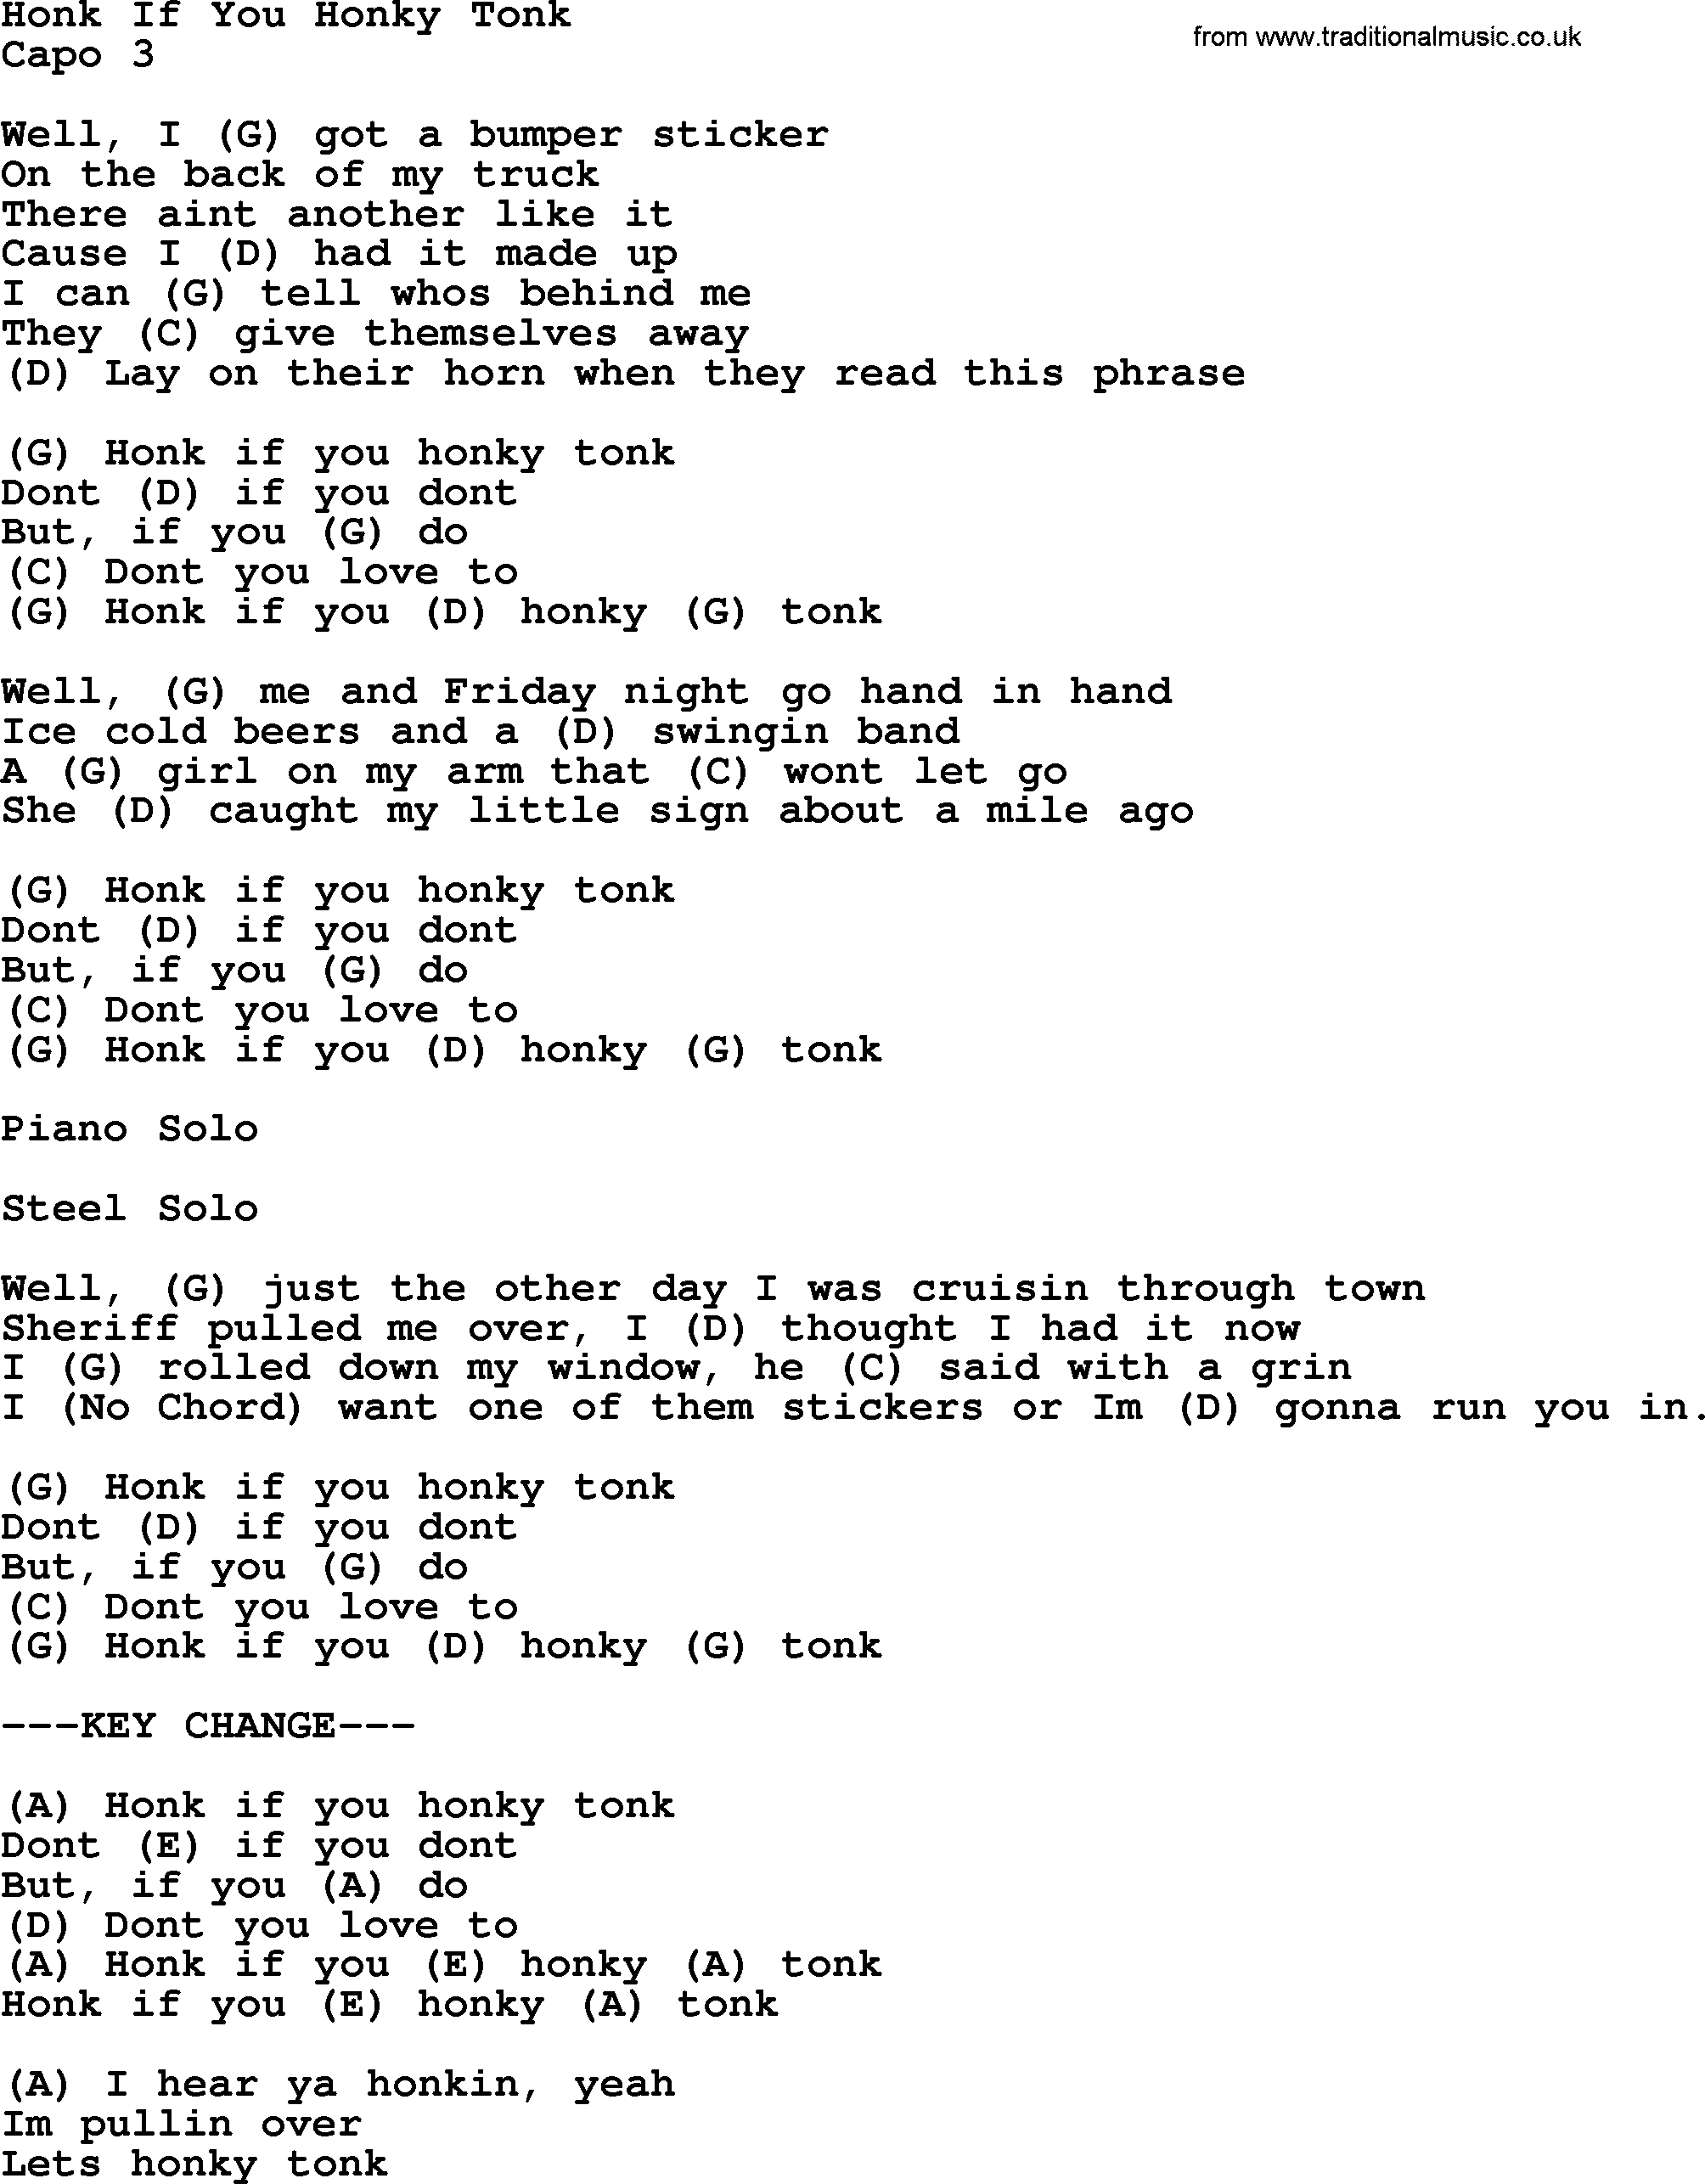 George Strait song: Honk If You Honky Tonk, lyrics and chords